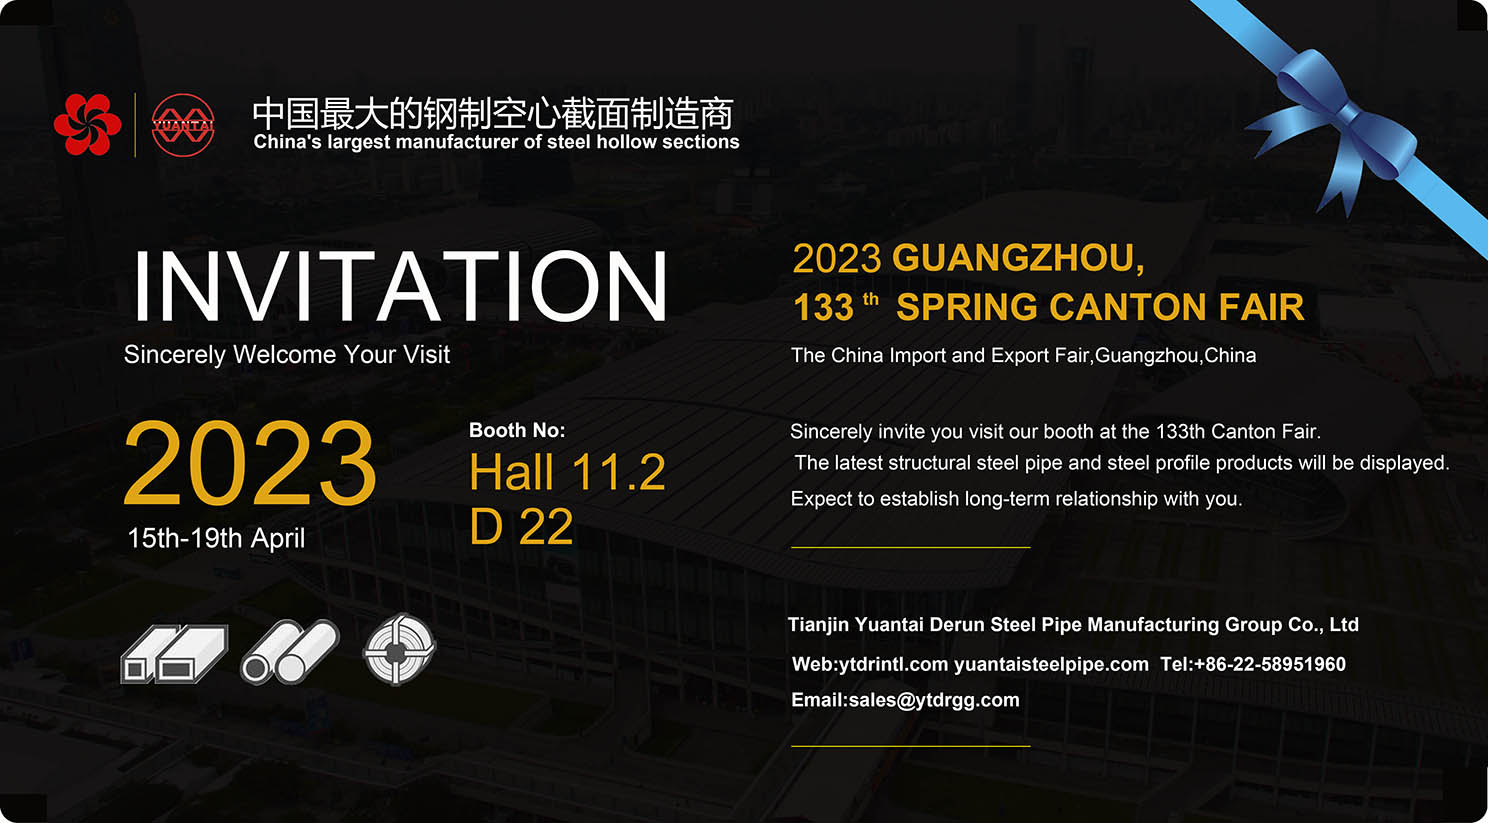 InvitLetero por Kantona Foiro en la angla-Tianjin Yuantai Derun Steel Pipe Manufacturing Group-yasuo